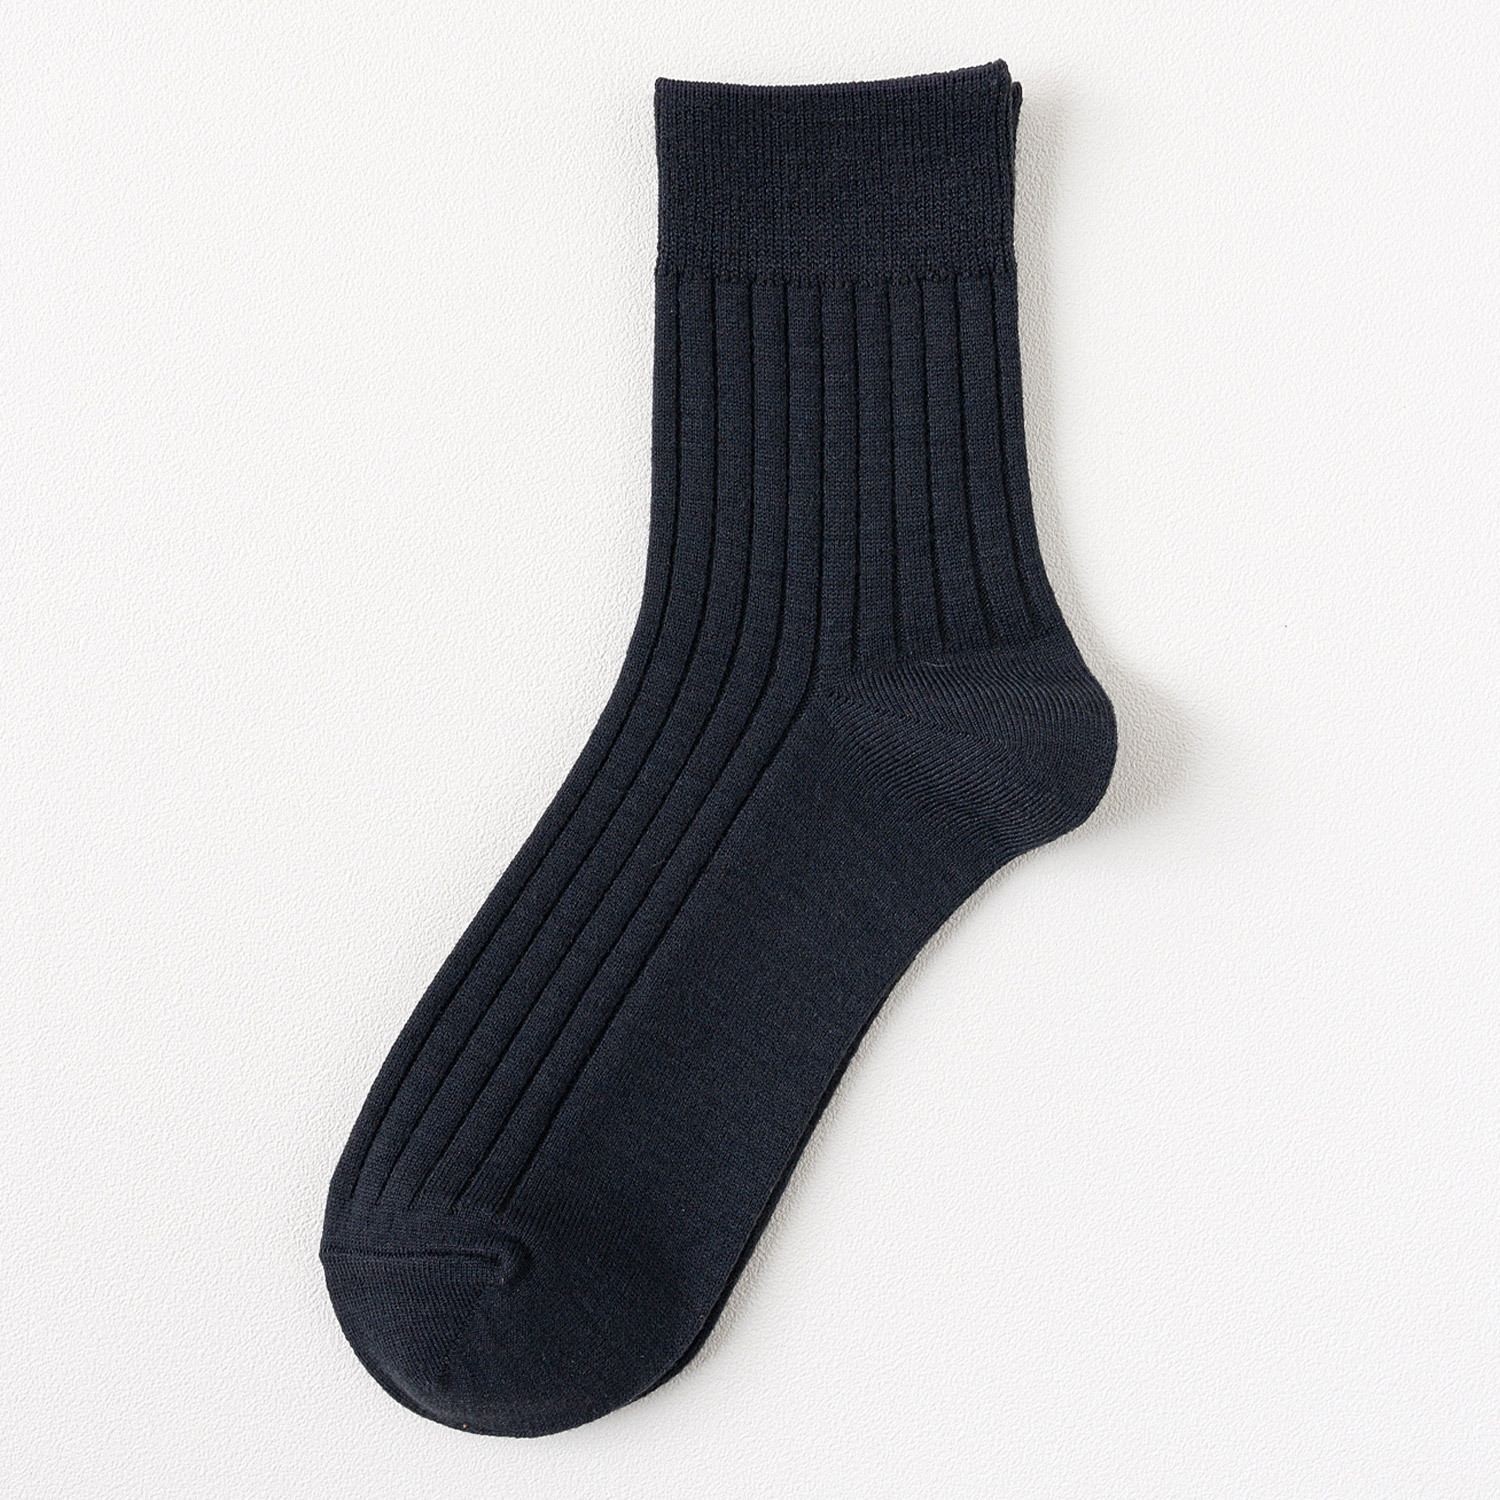 Foot Fall Winter Fashion Classic Men Socks Casual Socks Sprout Ankle Socks For Men Soft Warm Wool Socks